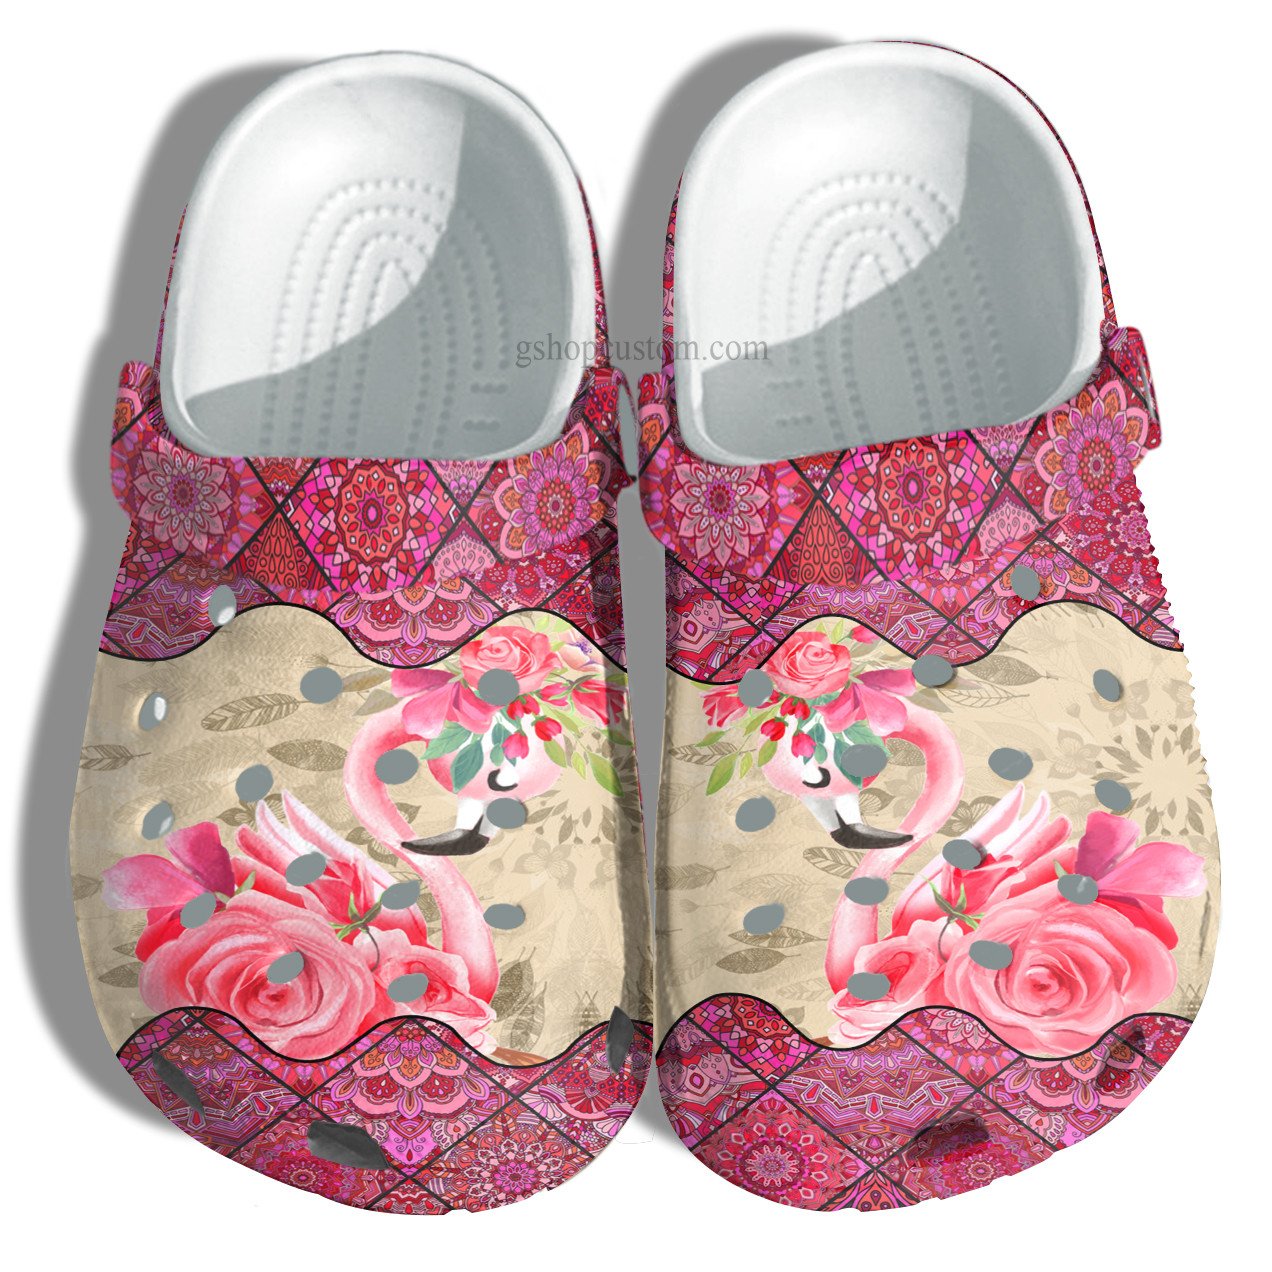 Flamingo Boho Pinky Croc Shoes Gift Besties- Peace Flamingo Hippie Boho Shoes Croc Clogs Gift Step Mom- Cr-Ne0480